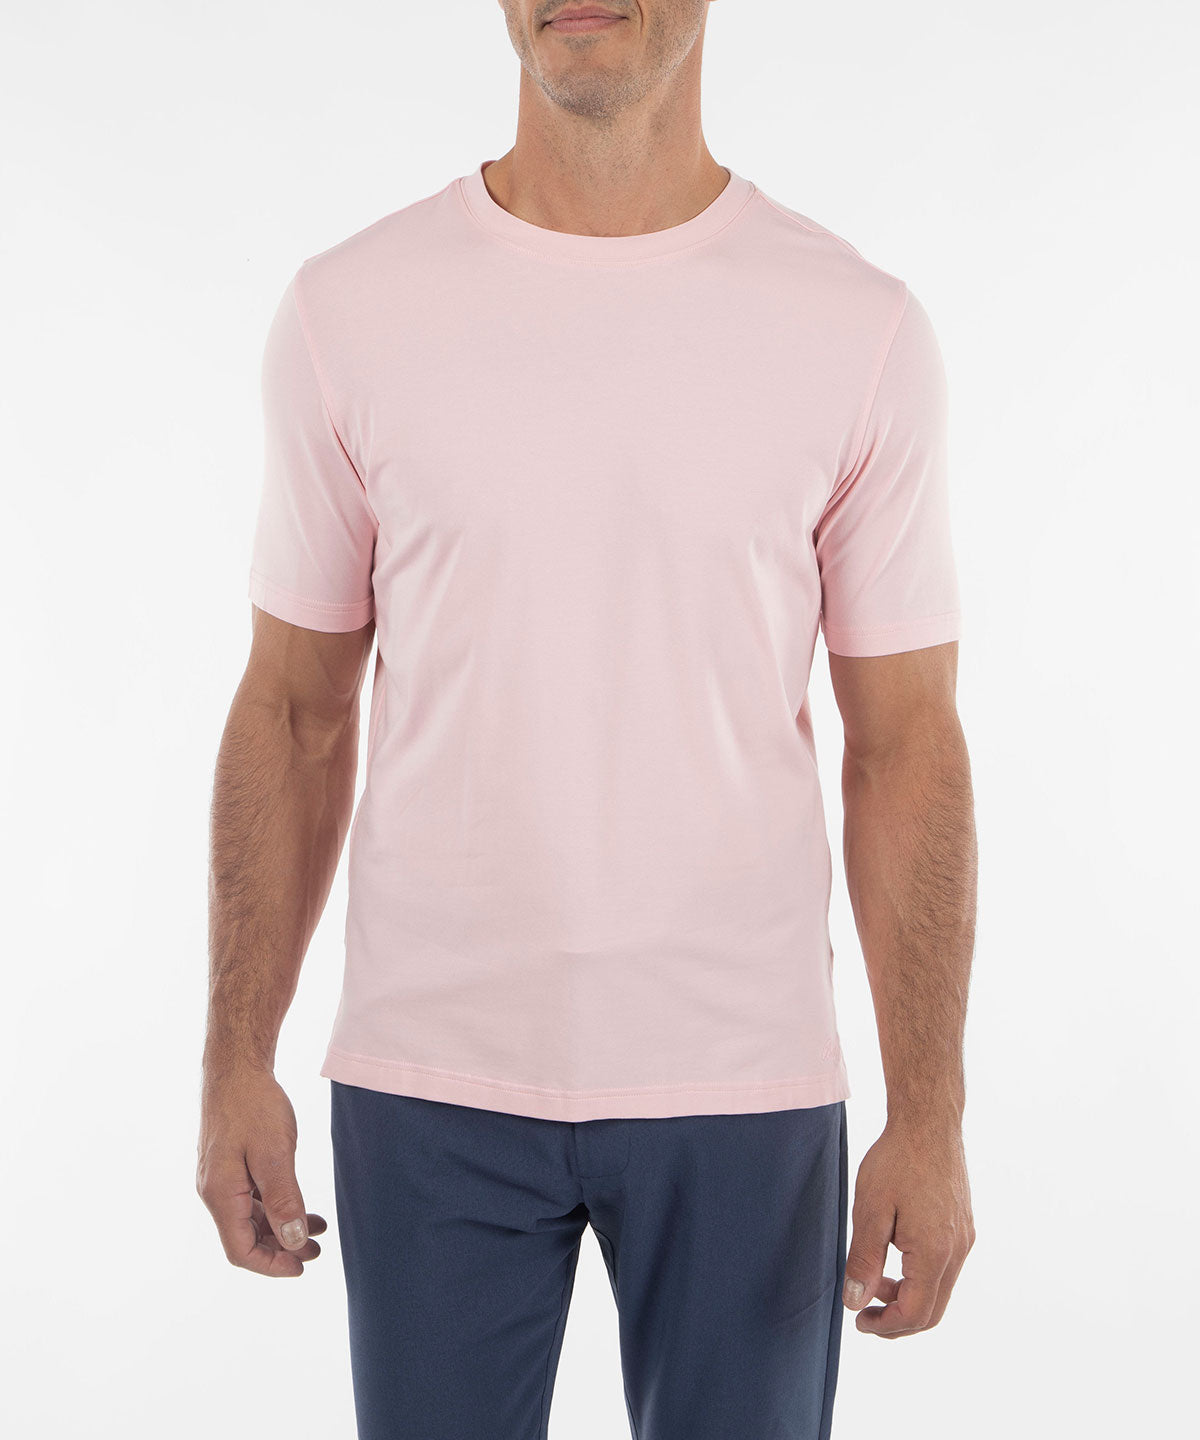 Soft Pink Cotton Satin Men's Shirt – JJAAGG T